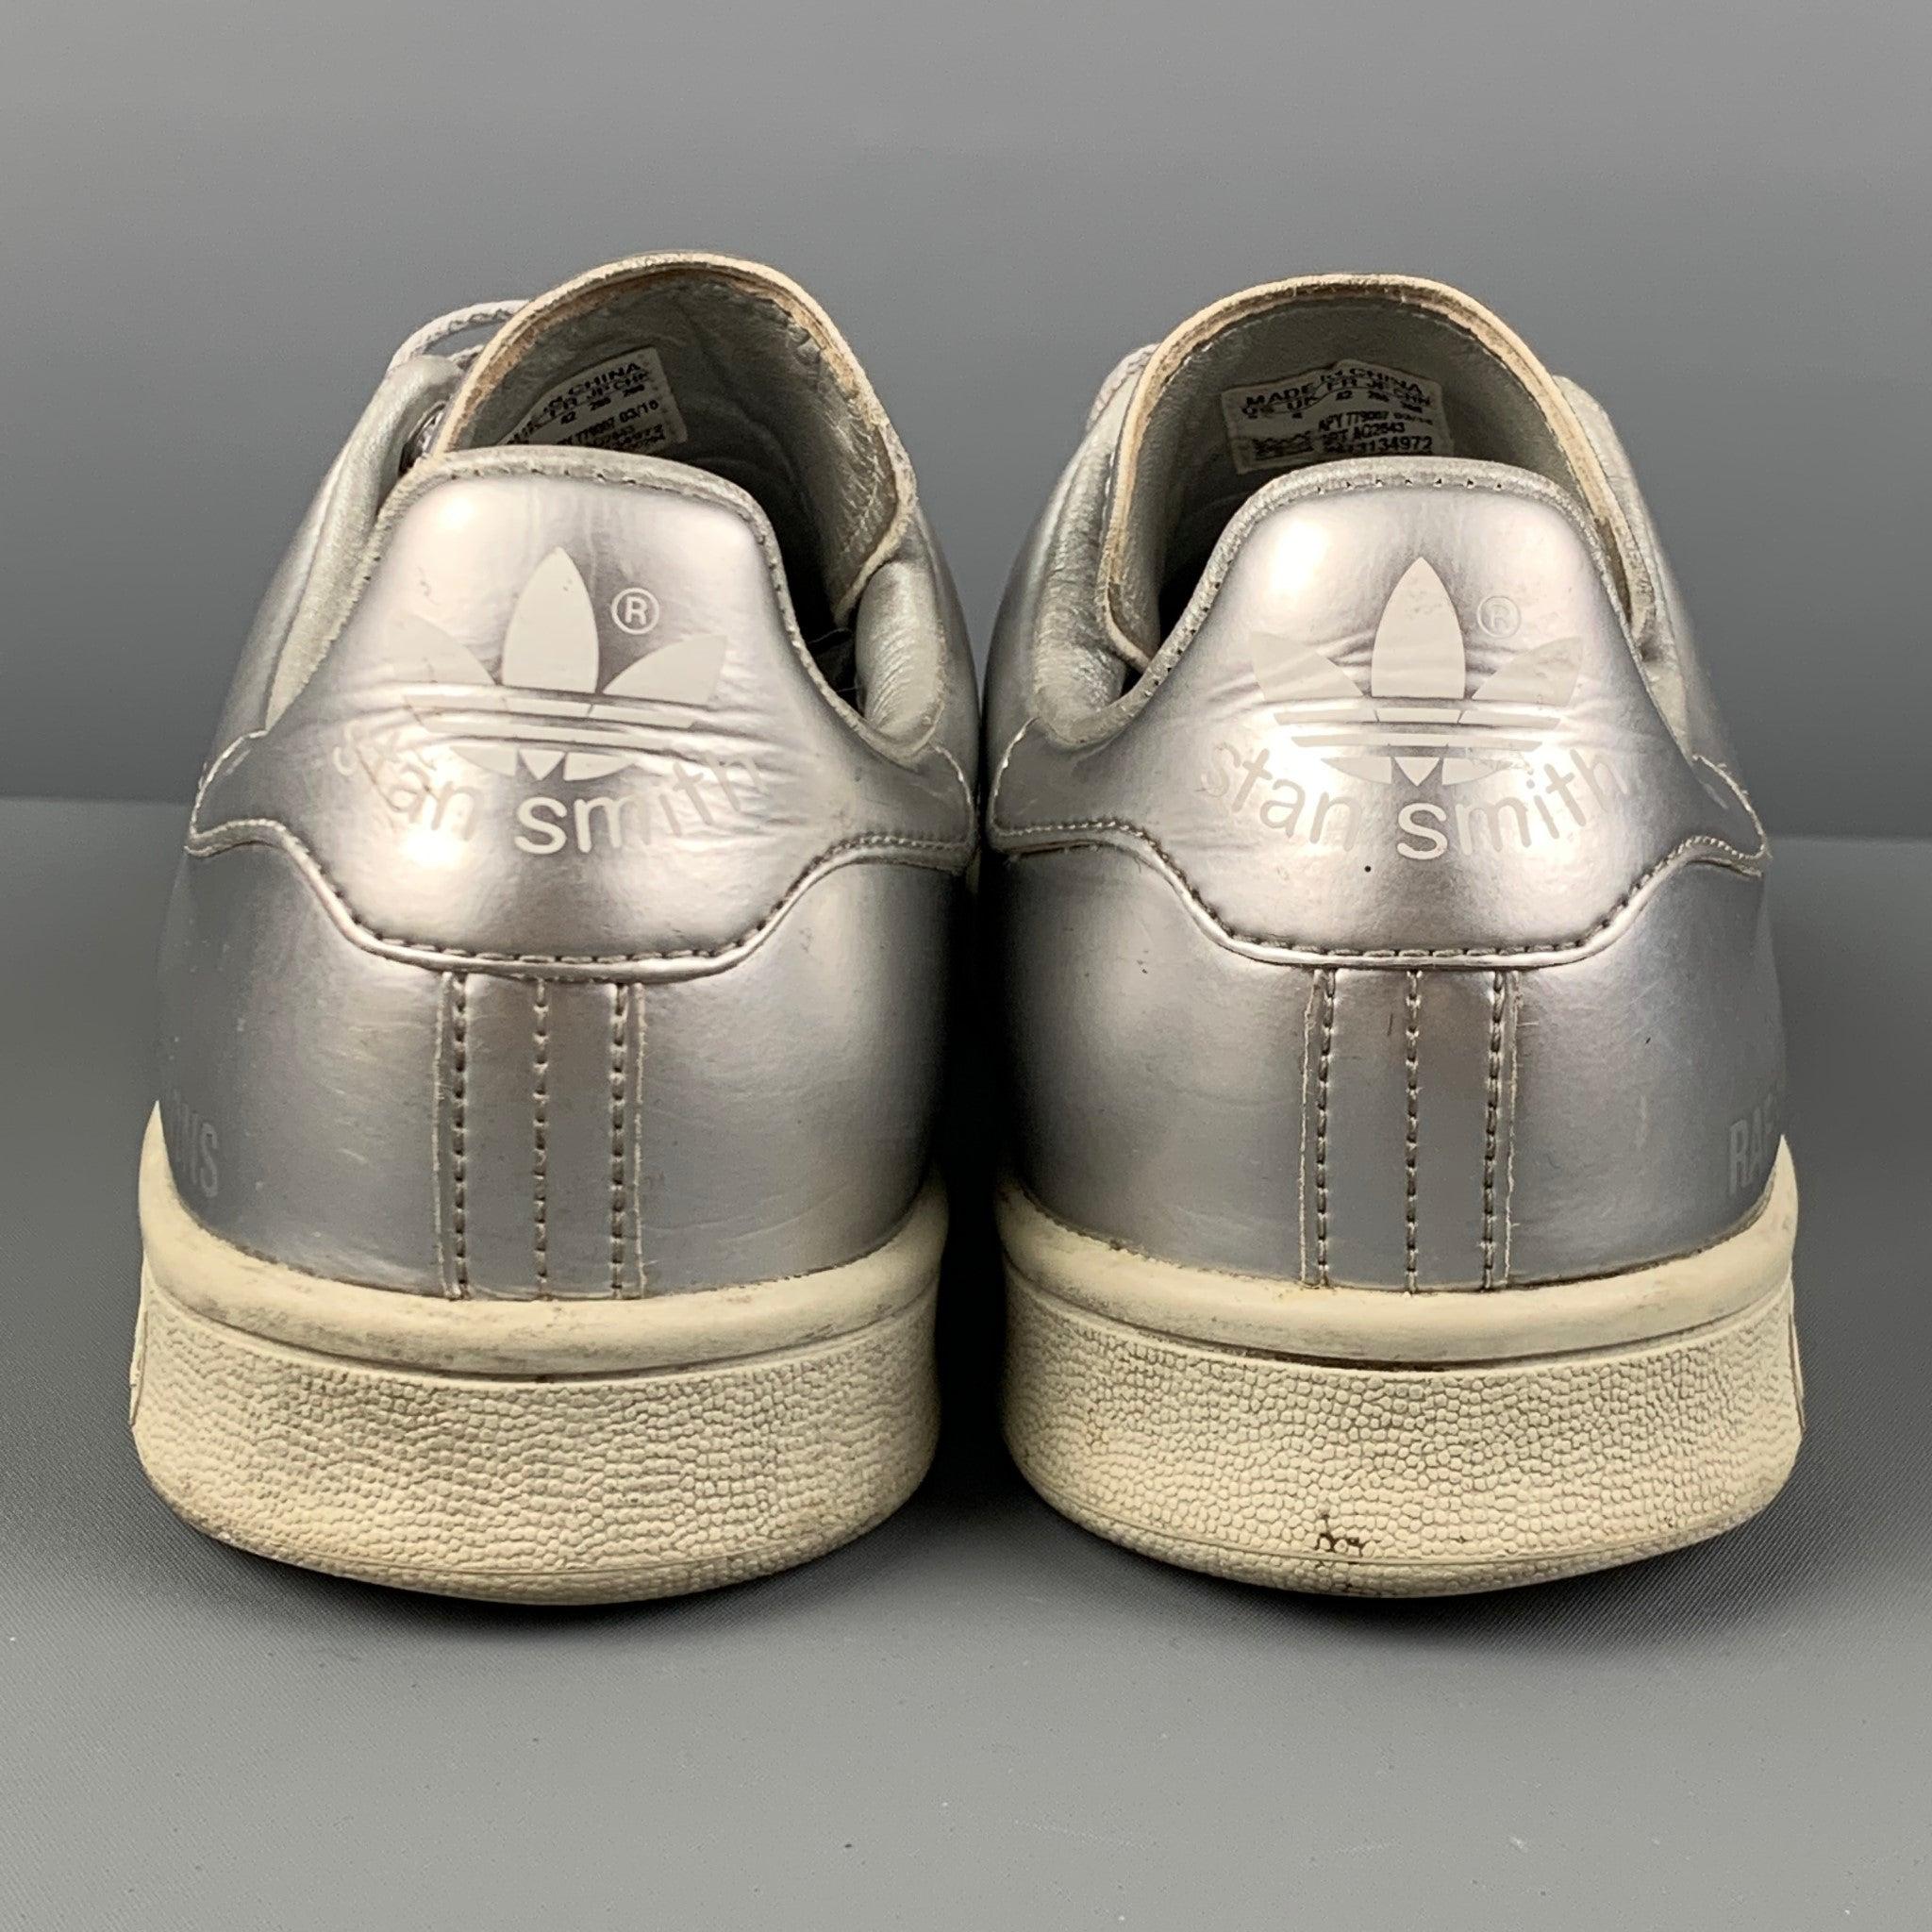 ADIDAS x RAF SIMONS Size 8.5 Silver Metallic Leather Low Top Sneakers 1